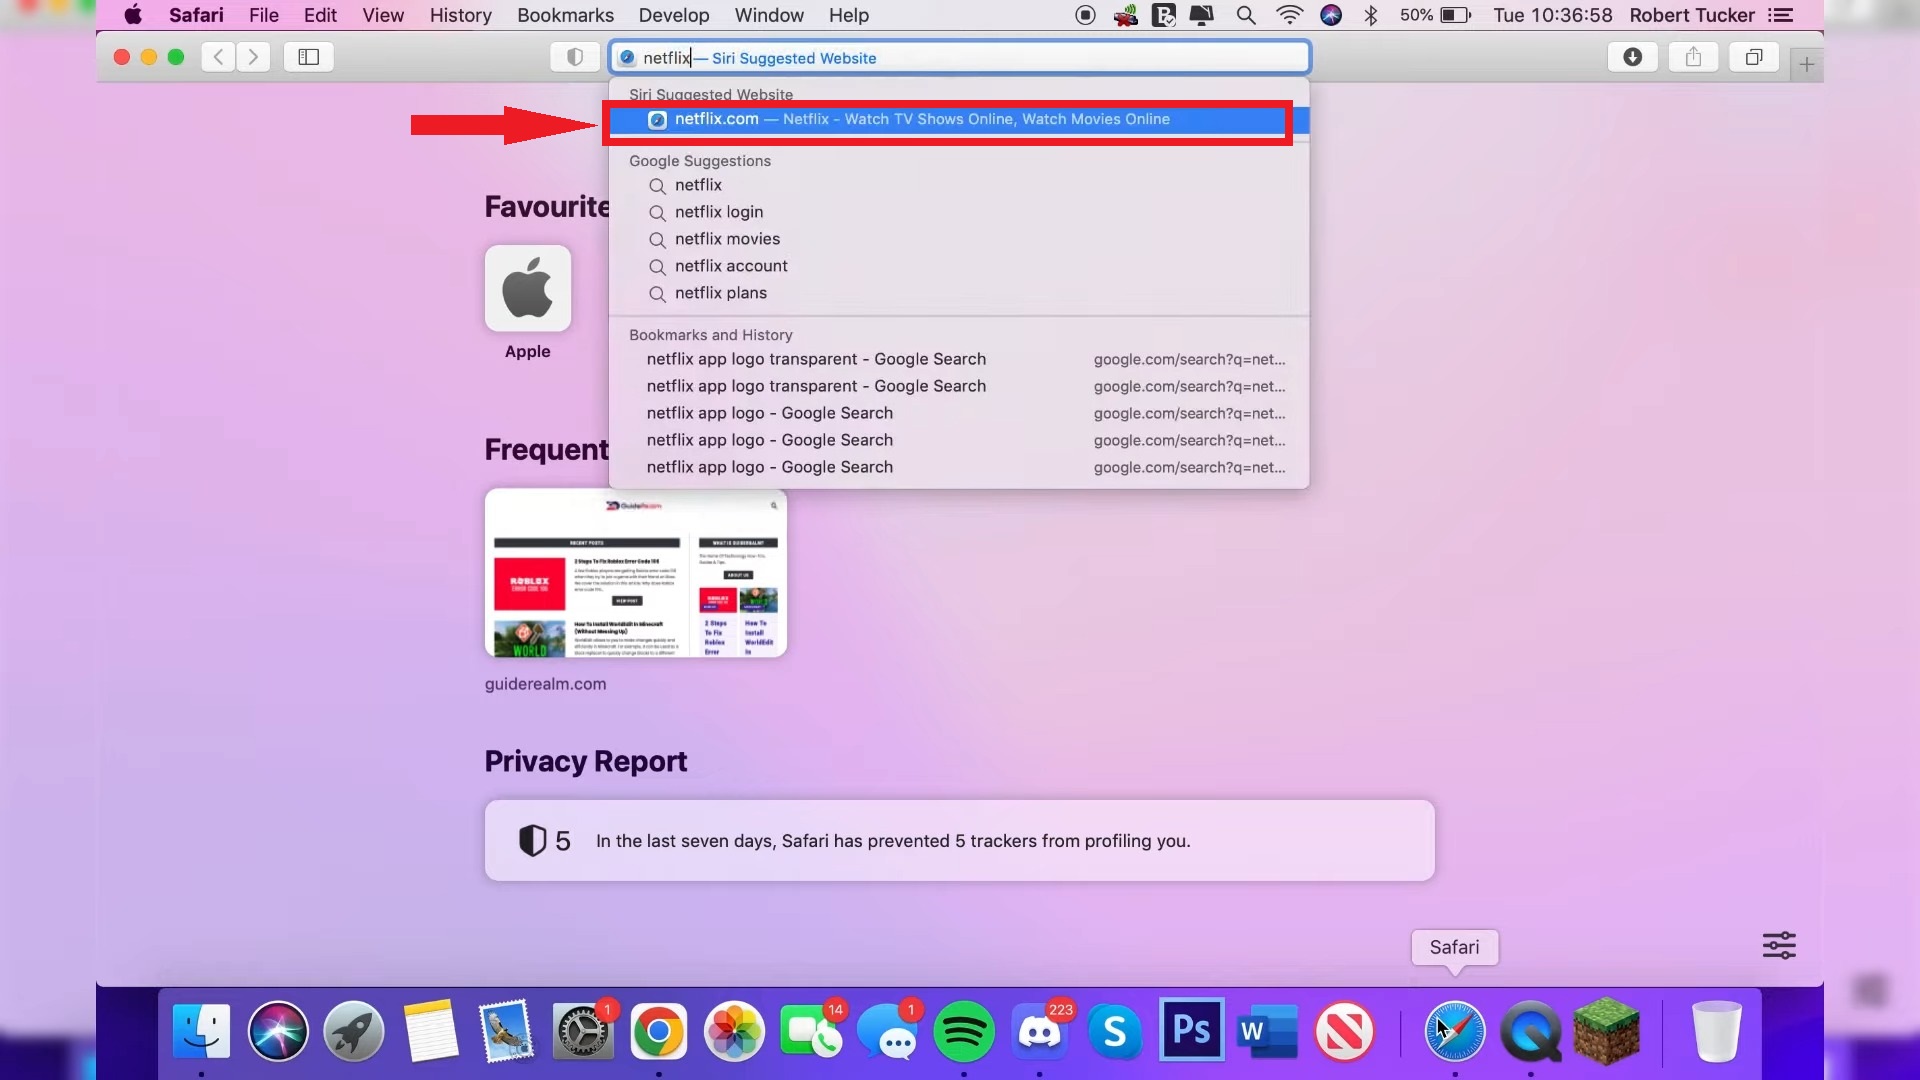 1. open Safari browser and go to netflix.com